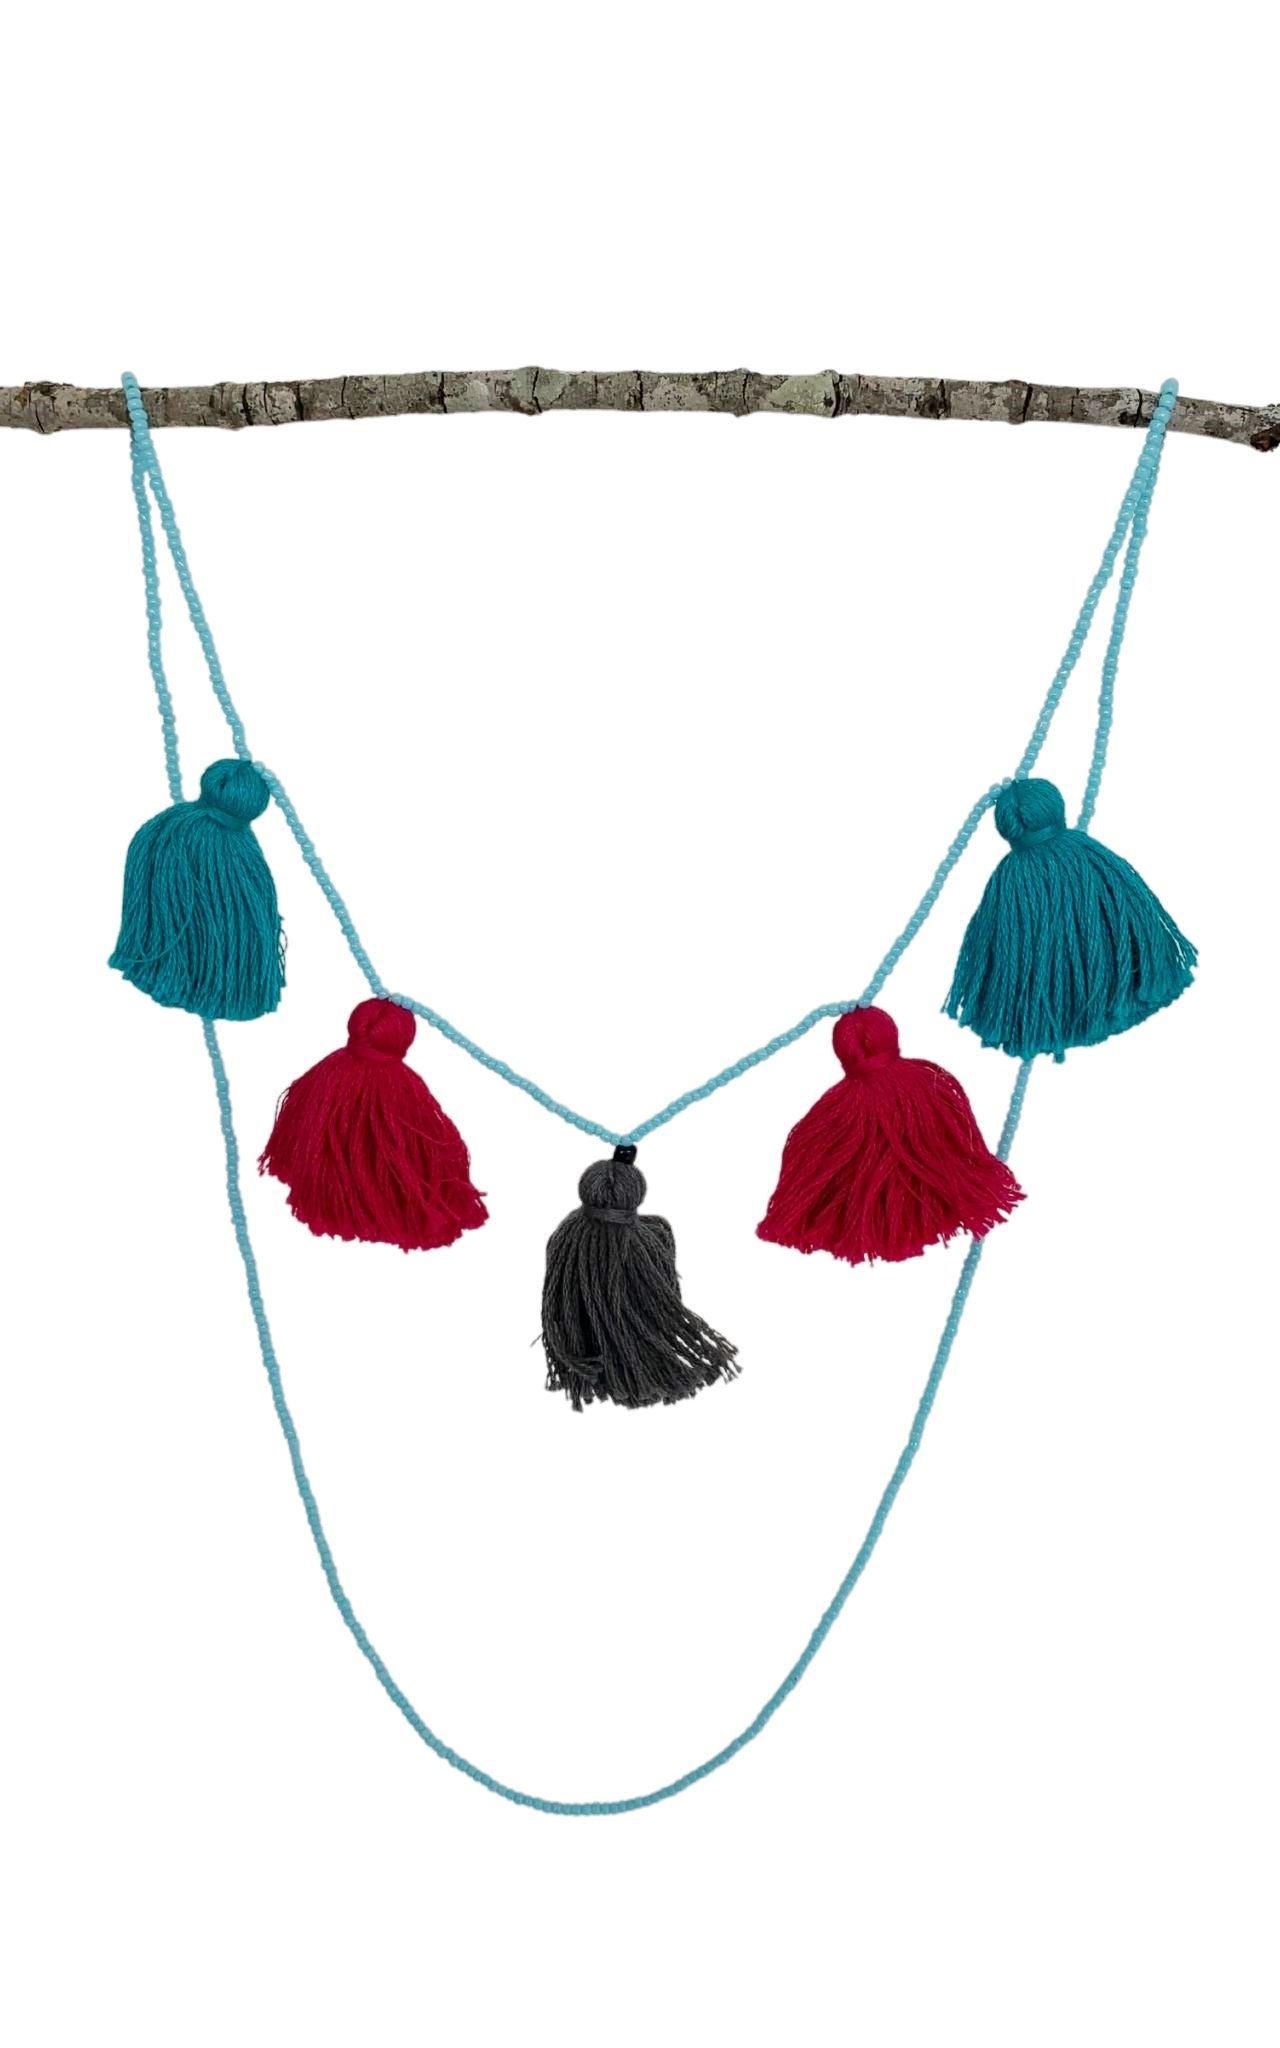 Surya Australia Ethical Cotton Tassel Necklaces from Nepal - Asana